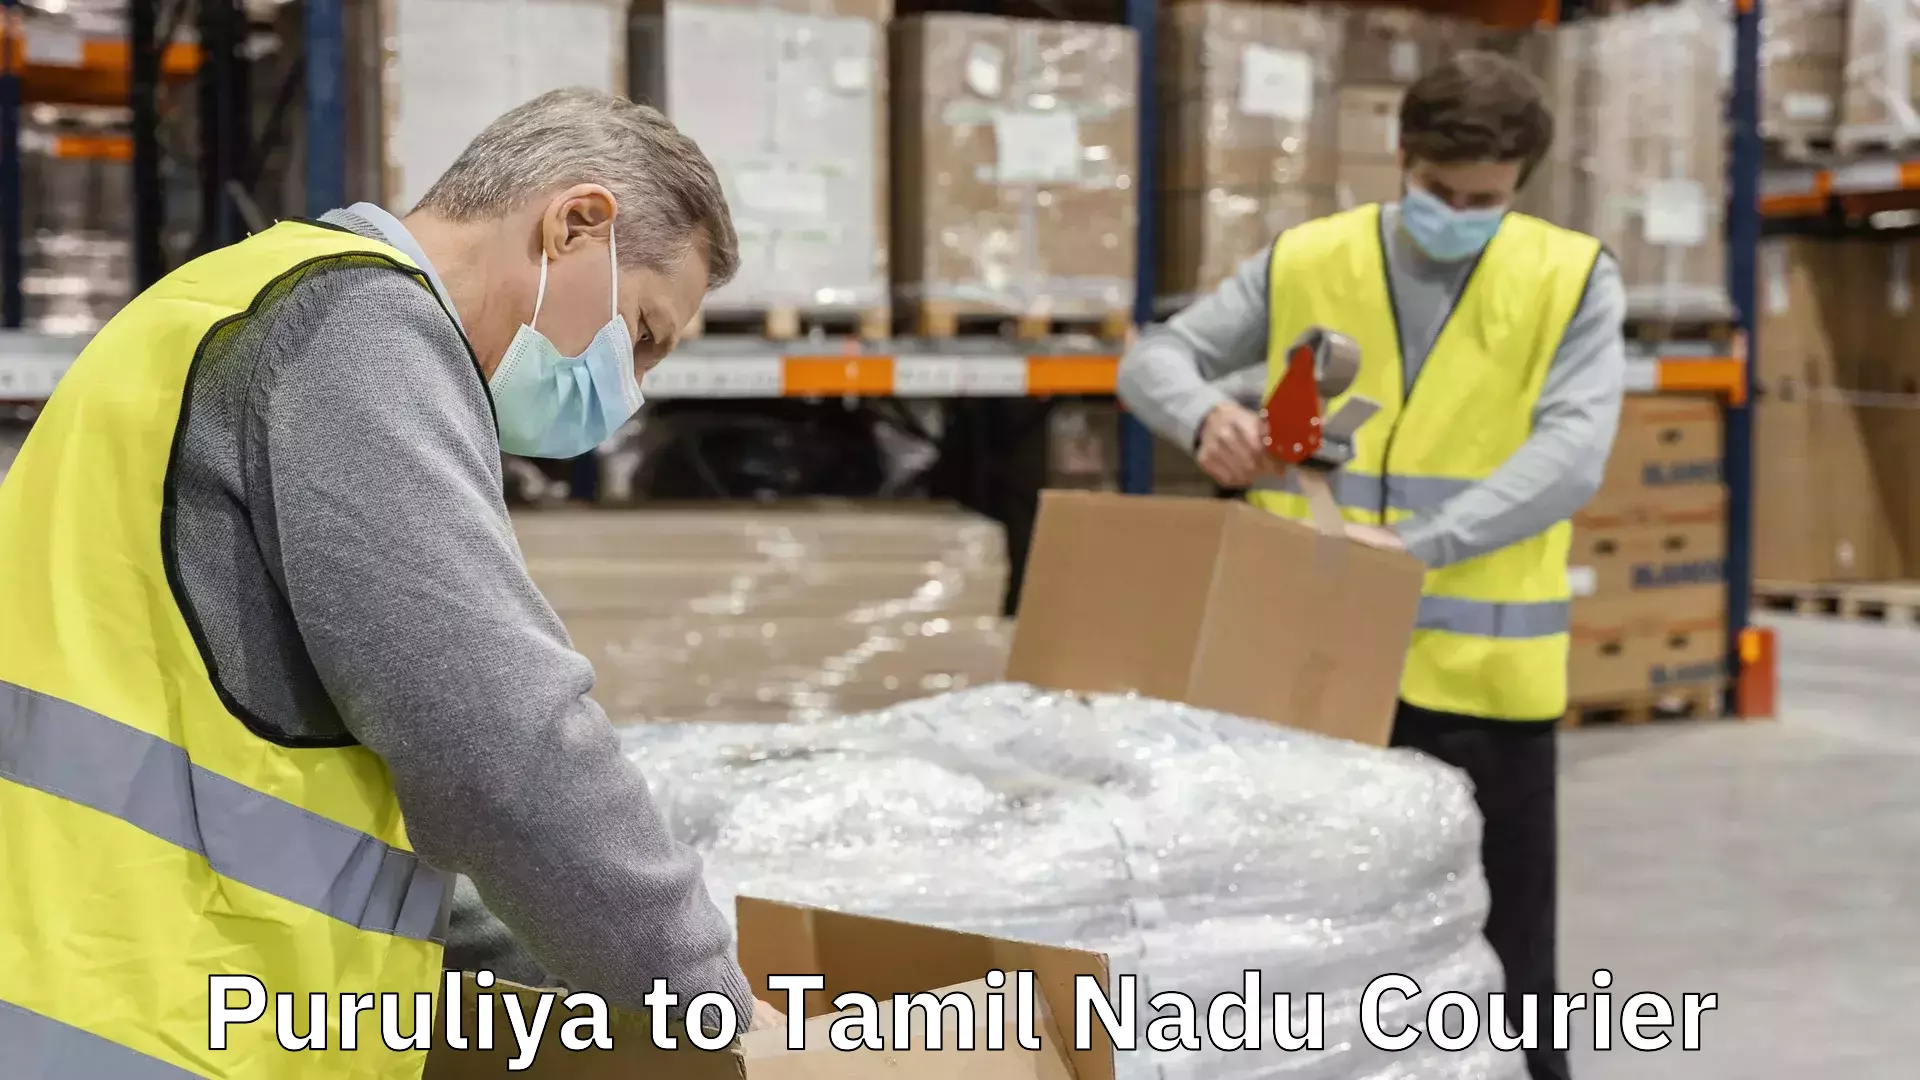 Professional courier handling Puruliya to Tamil Nadu